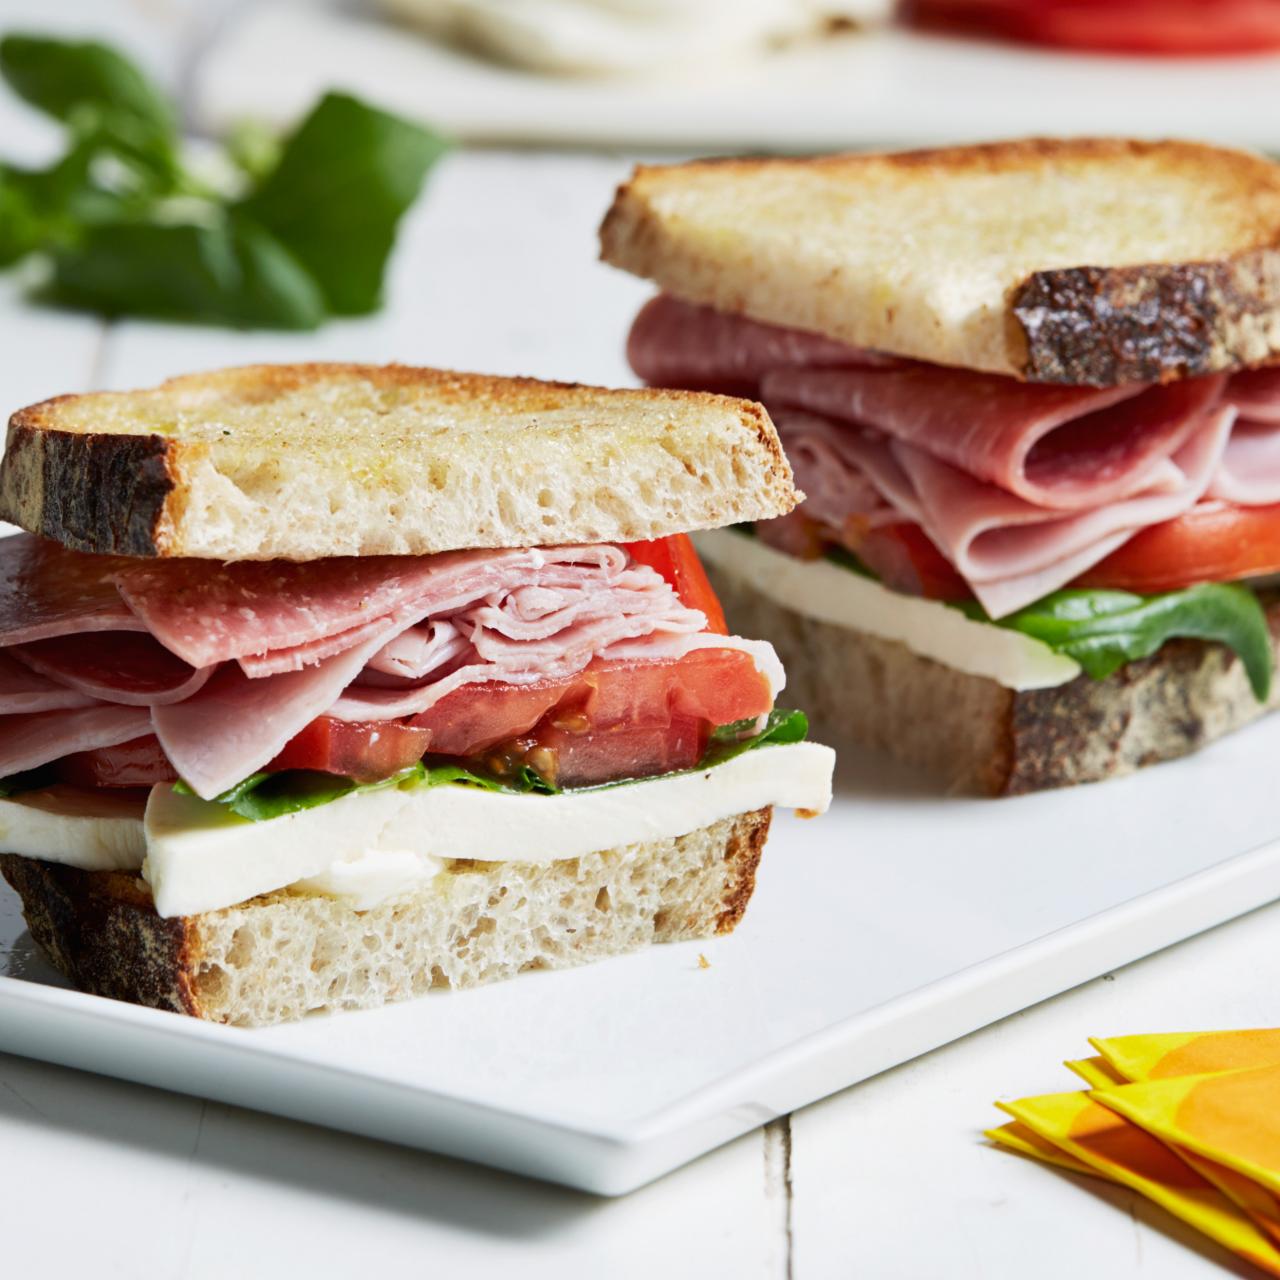 Best Sandwich Makers To Buy - Top 7 Picks